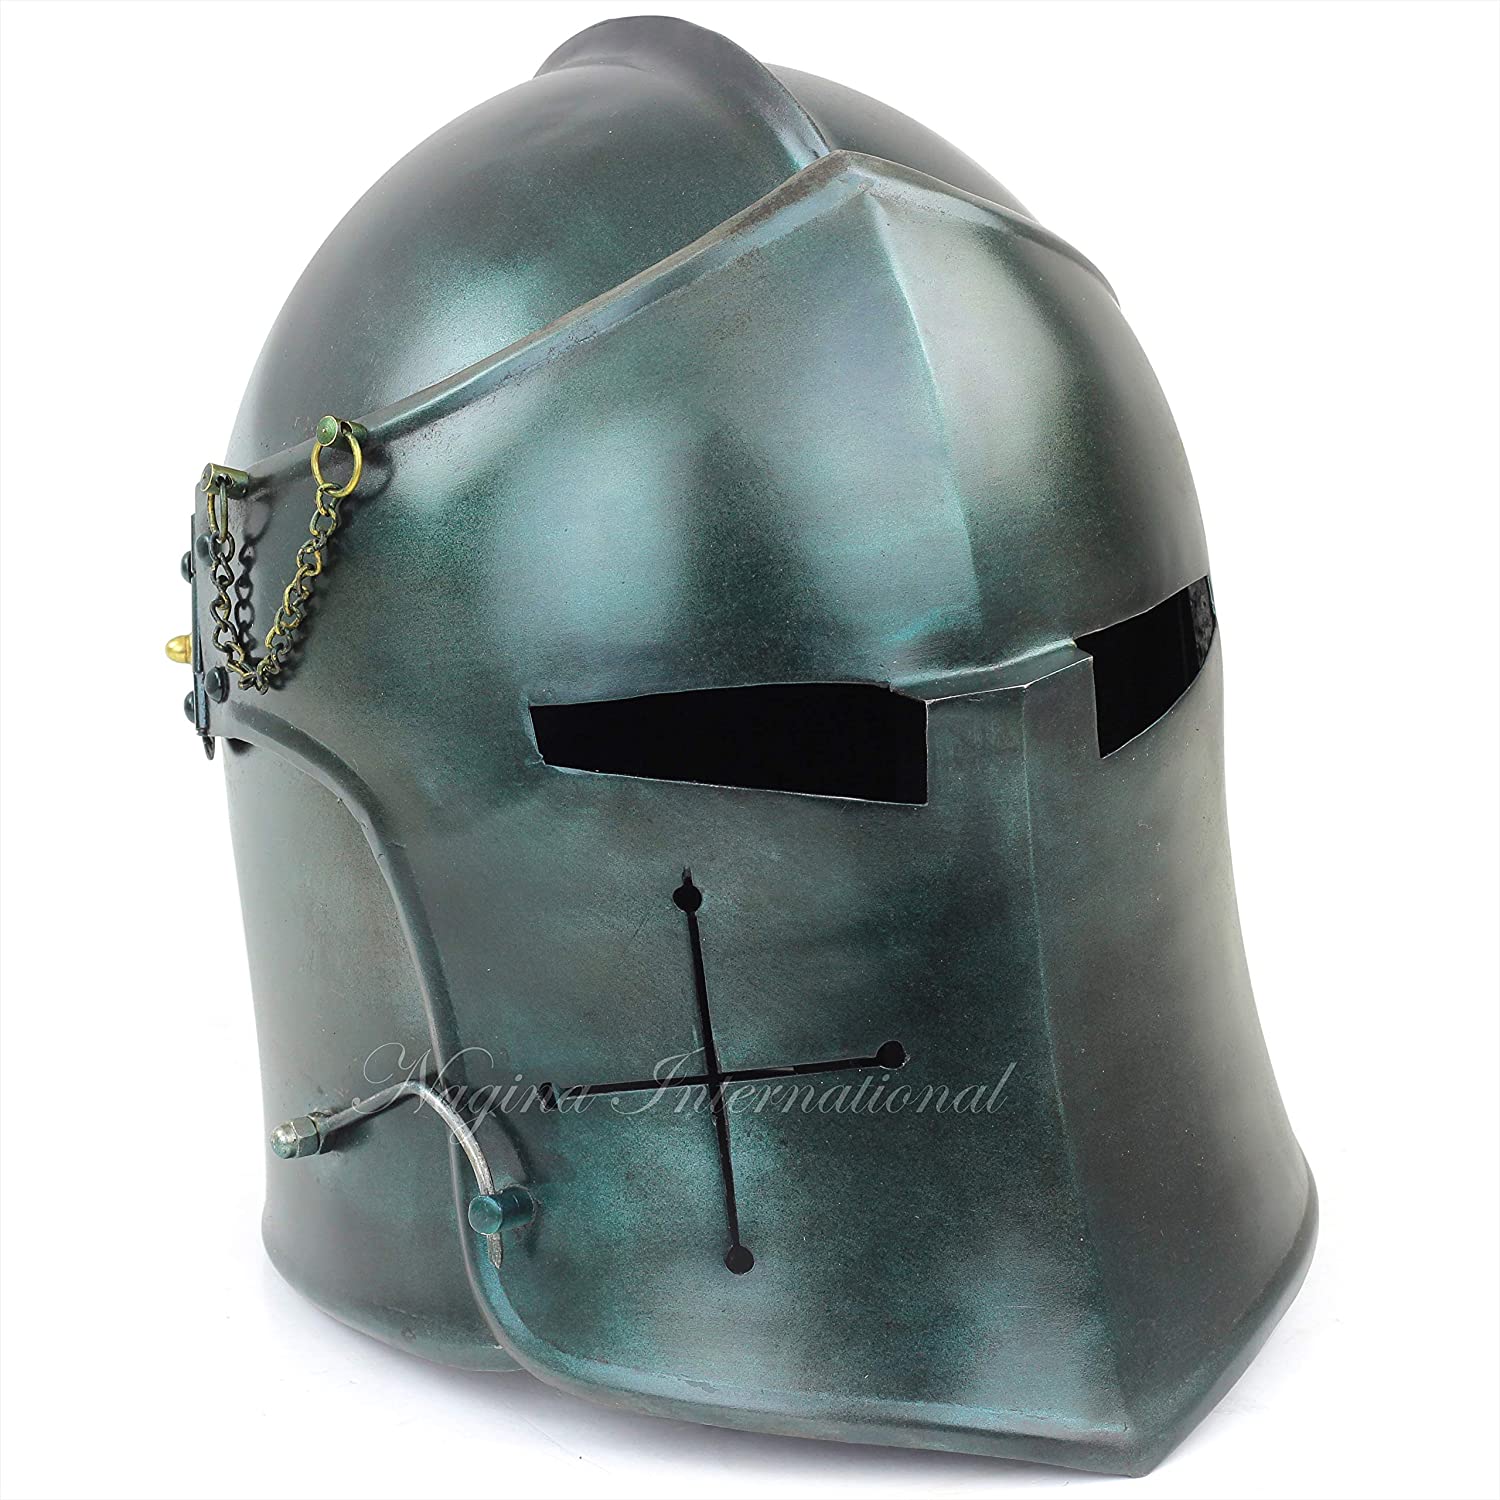 Nagina International Medieval Barbuta Visored Brushed Steel Knights Armory Templar Crusader's Helmet | Props & Costumes Helm for Larpers (Army Green) - image 1 of 1